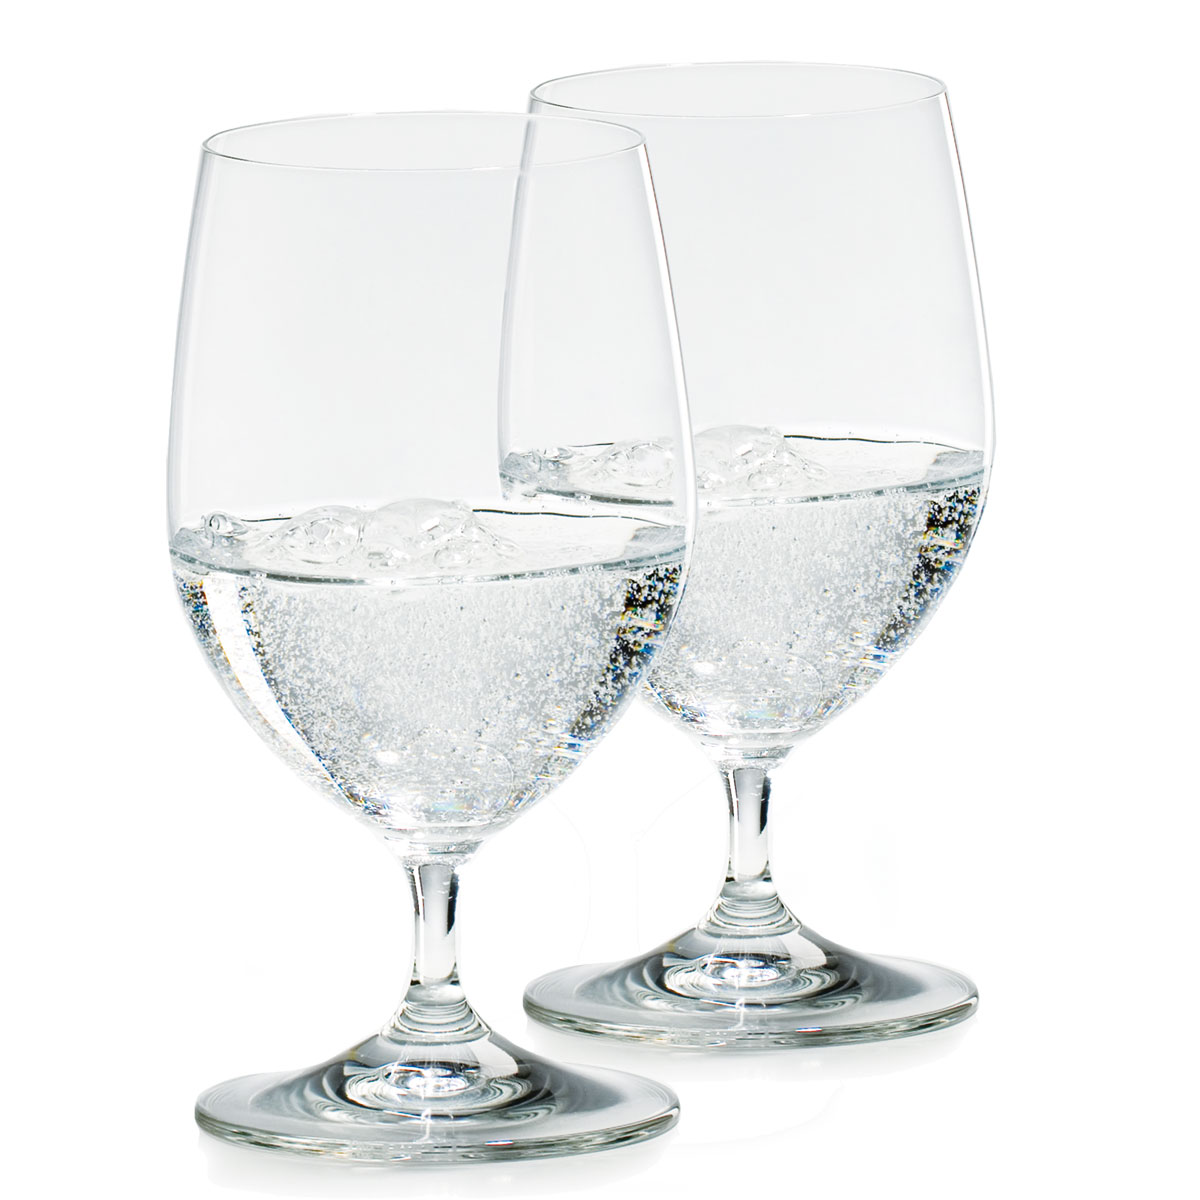 Riedel Vinum Water Glasses, Pair